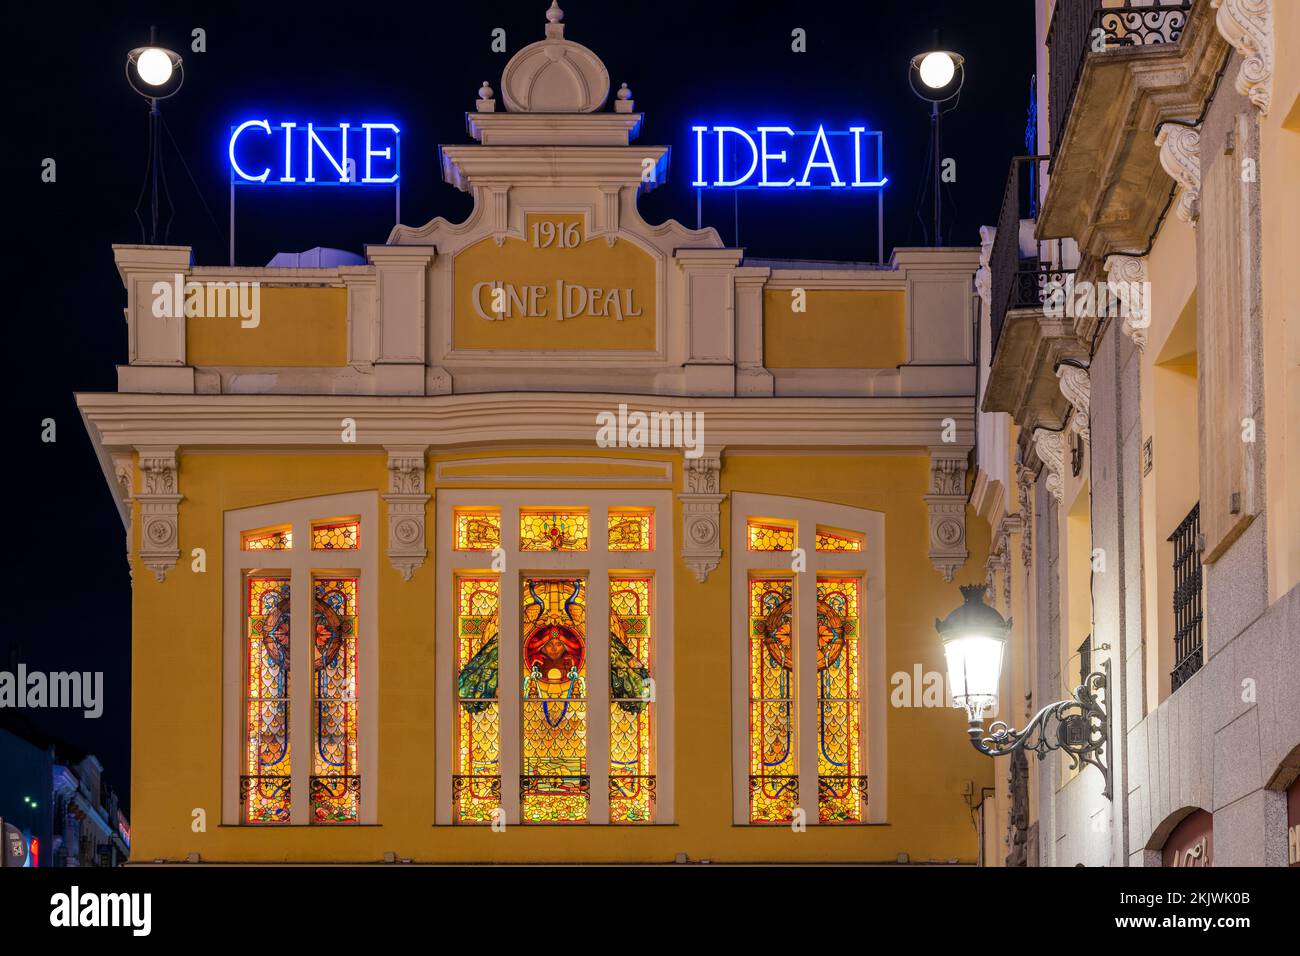 Cinema ideale Cine, Madrid, Spagna Foto Stock